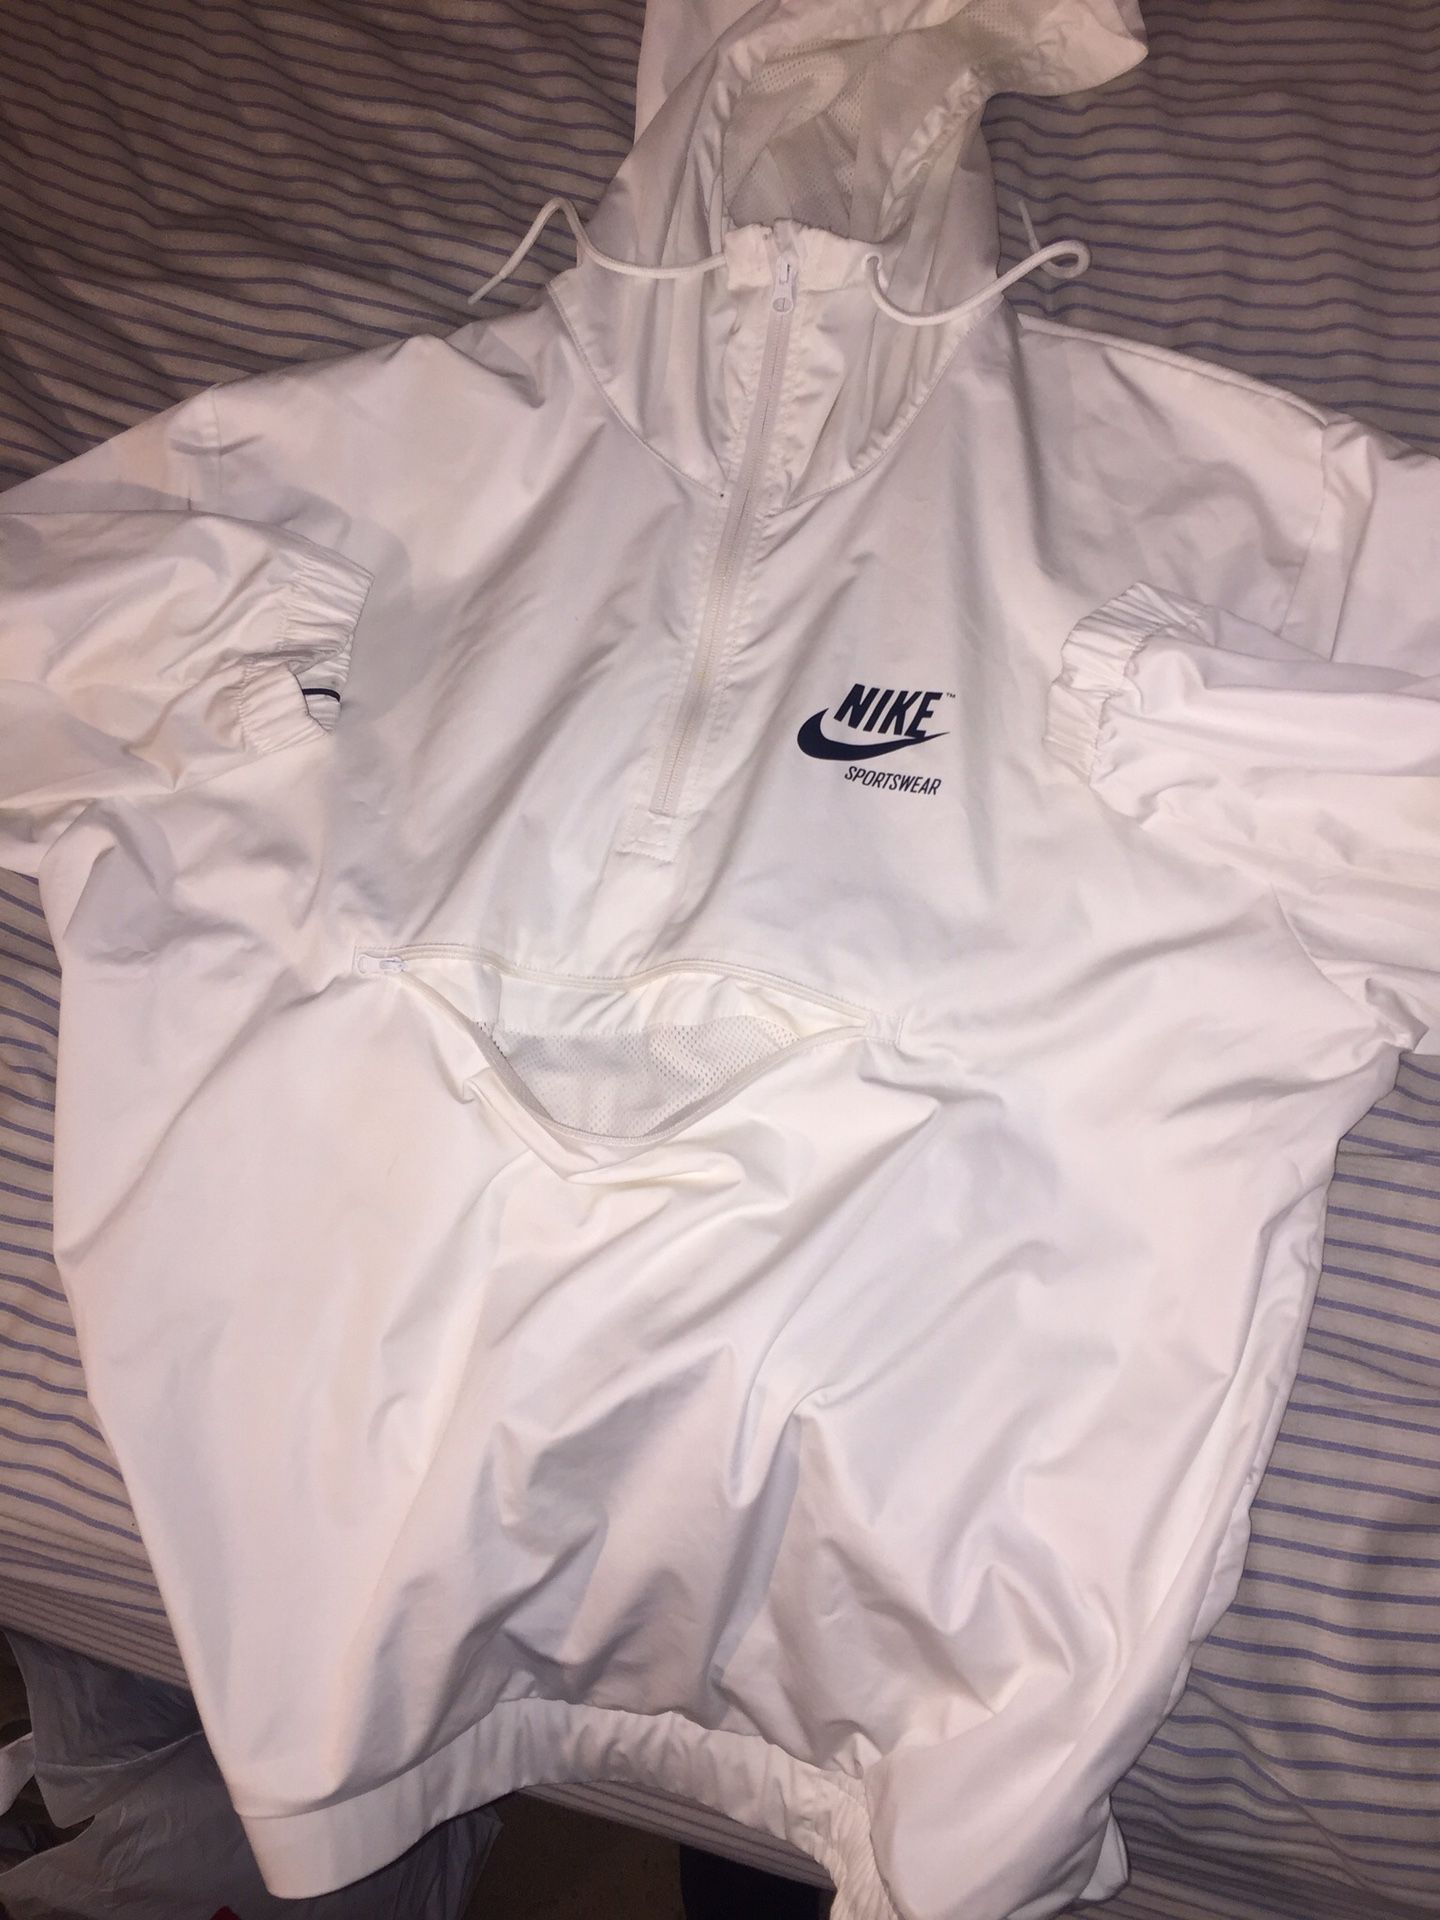 XL White Nike Jacket